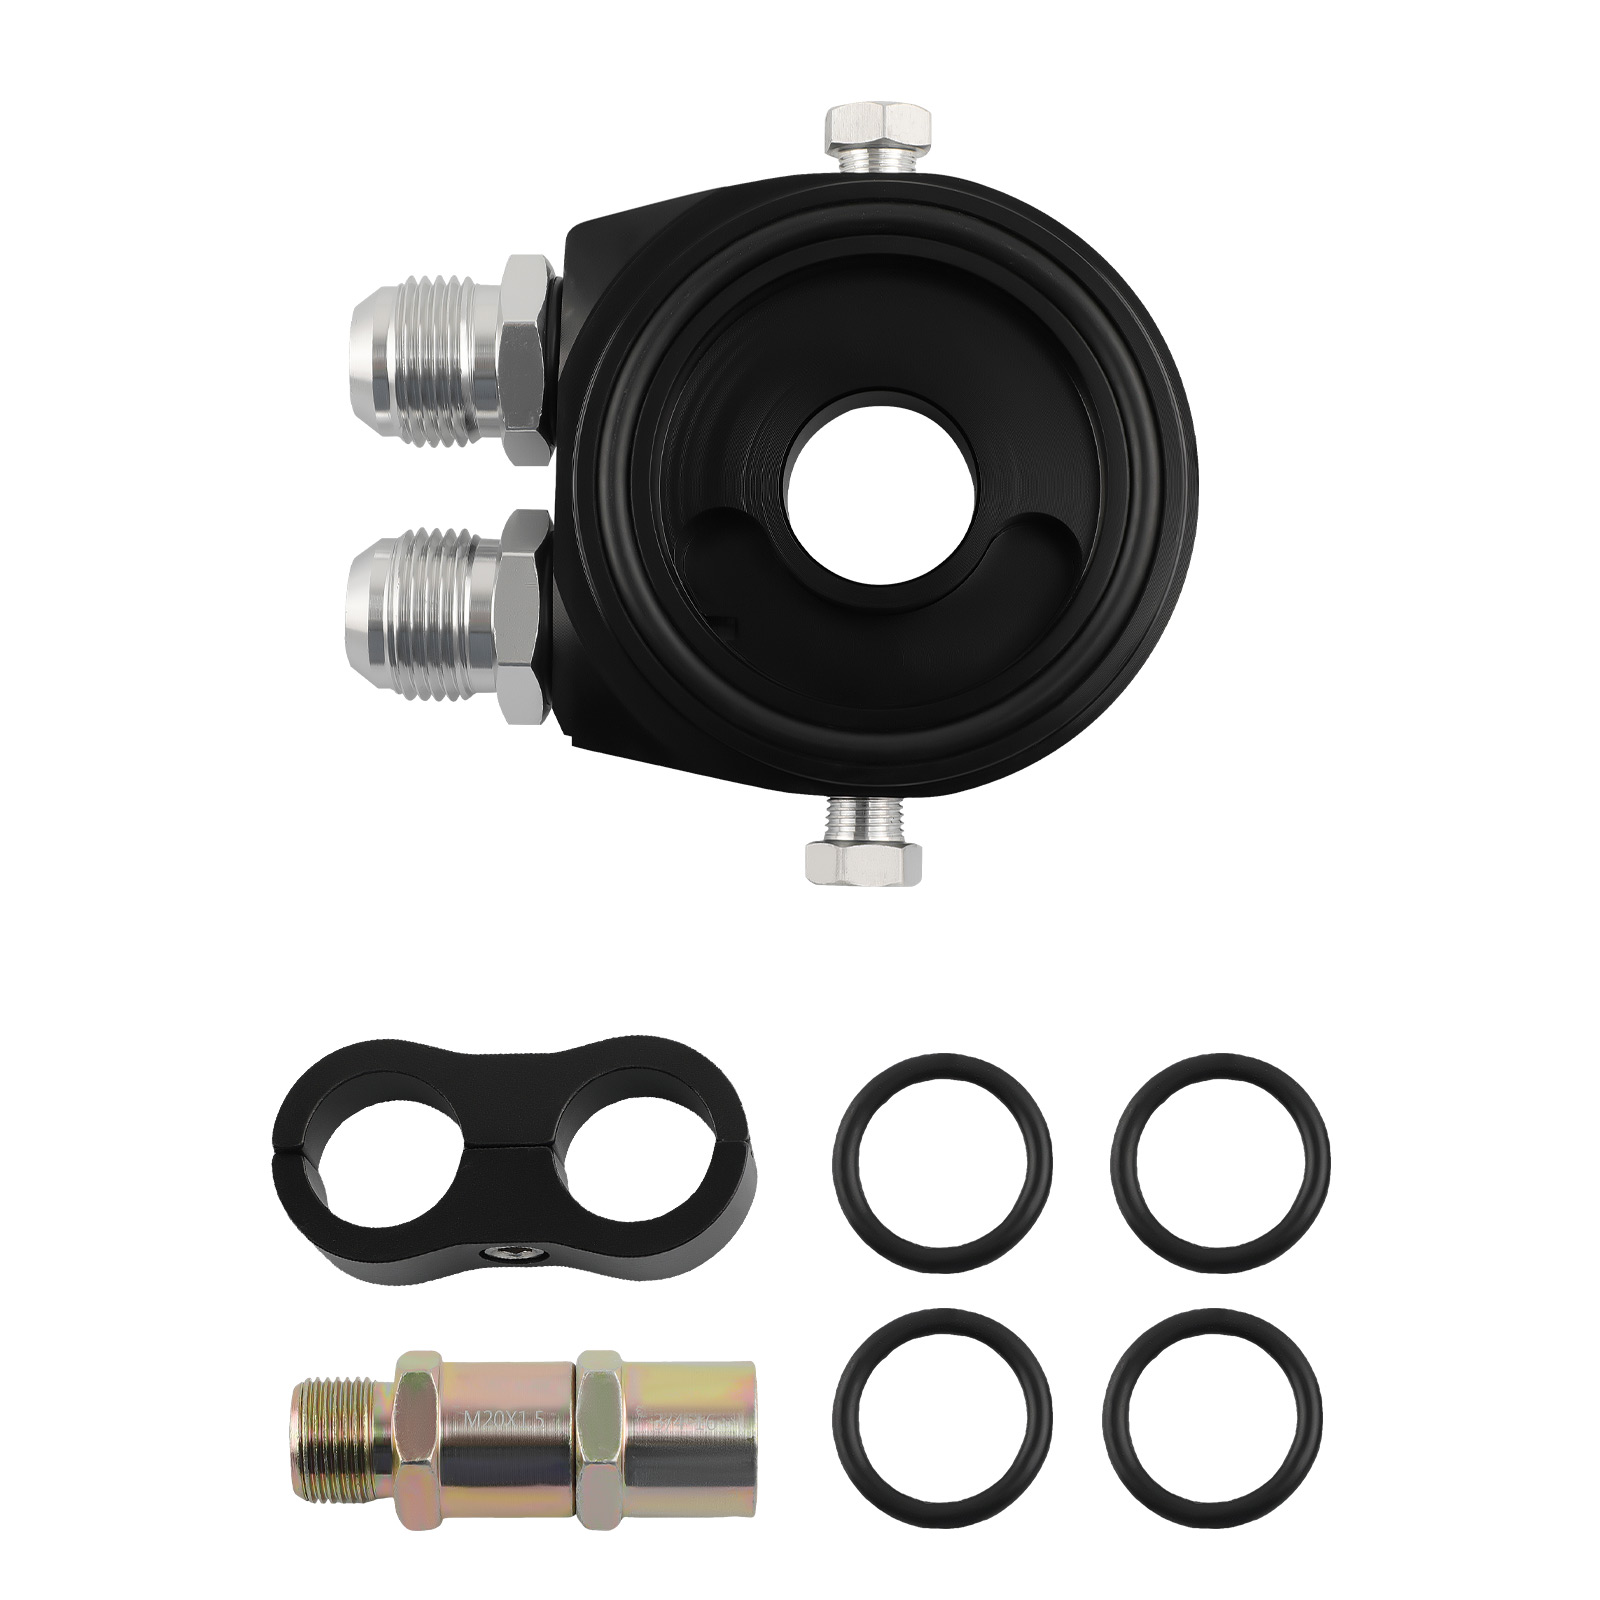 Universal Oil Cooler 13 ROW AN10 Filter Adapter Kit Huile Refroidisseur Kit